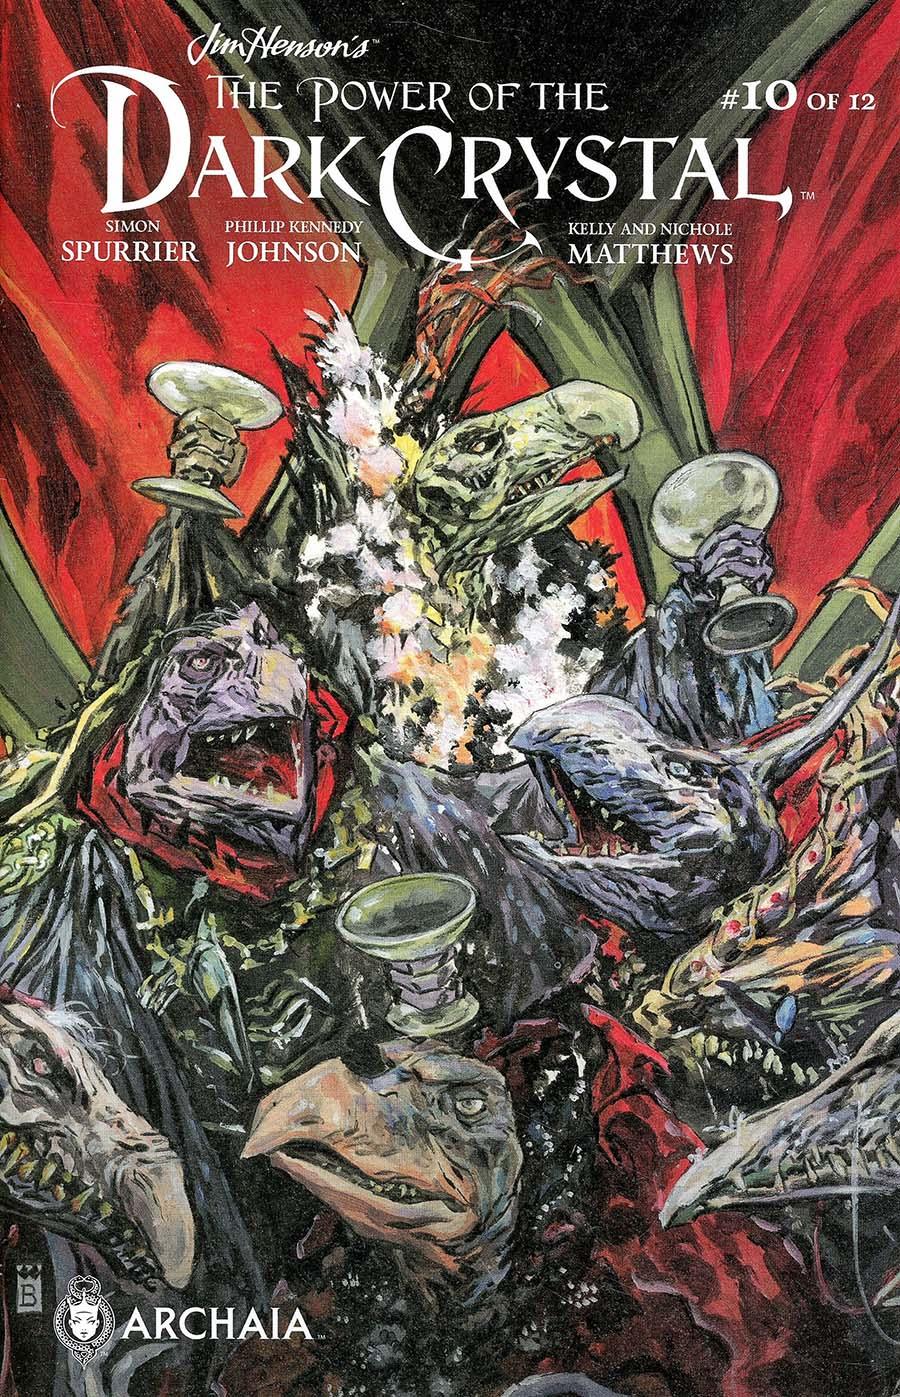 Jim Hensons Power Of The Dark Crystal Vol. 1 #10